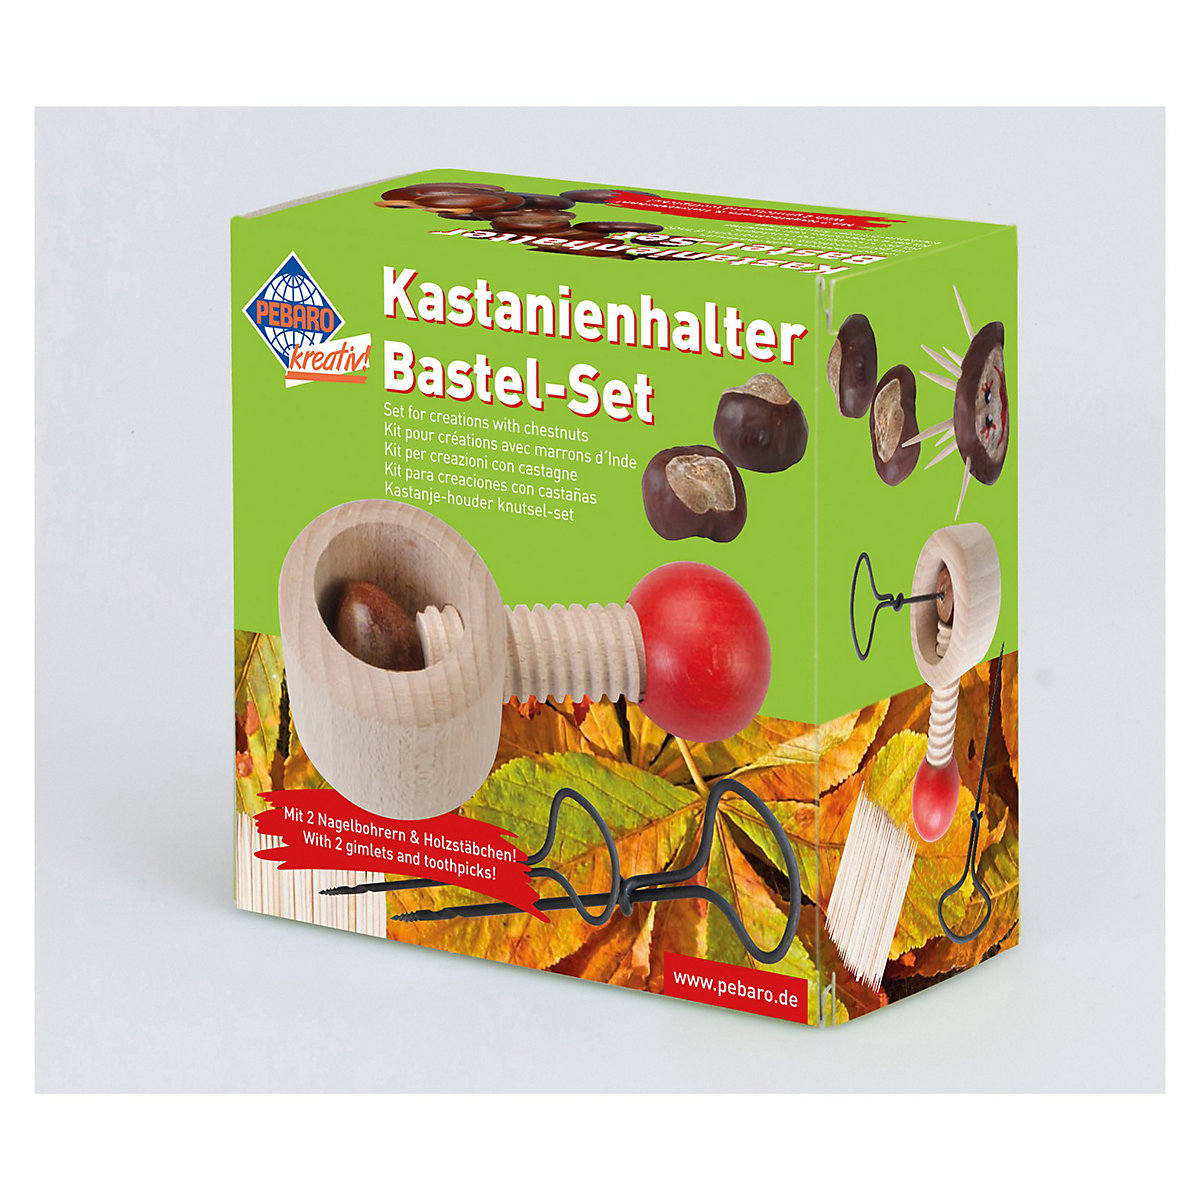 Pebaro Kastanienhalter / Kastanienbohrer Bastel-Set